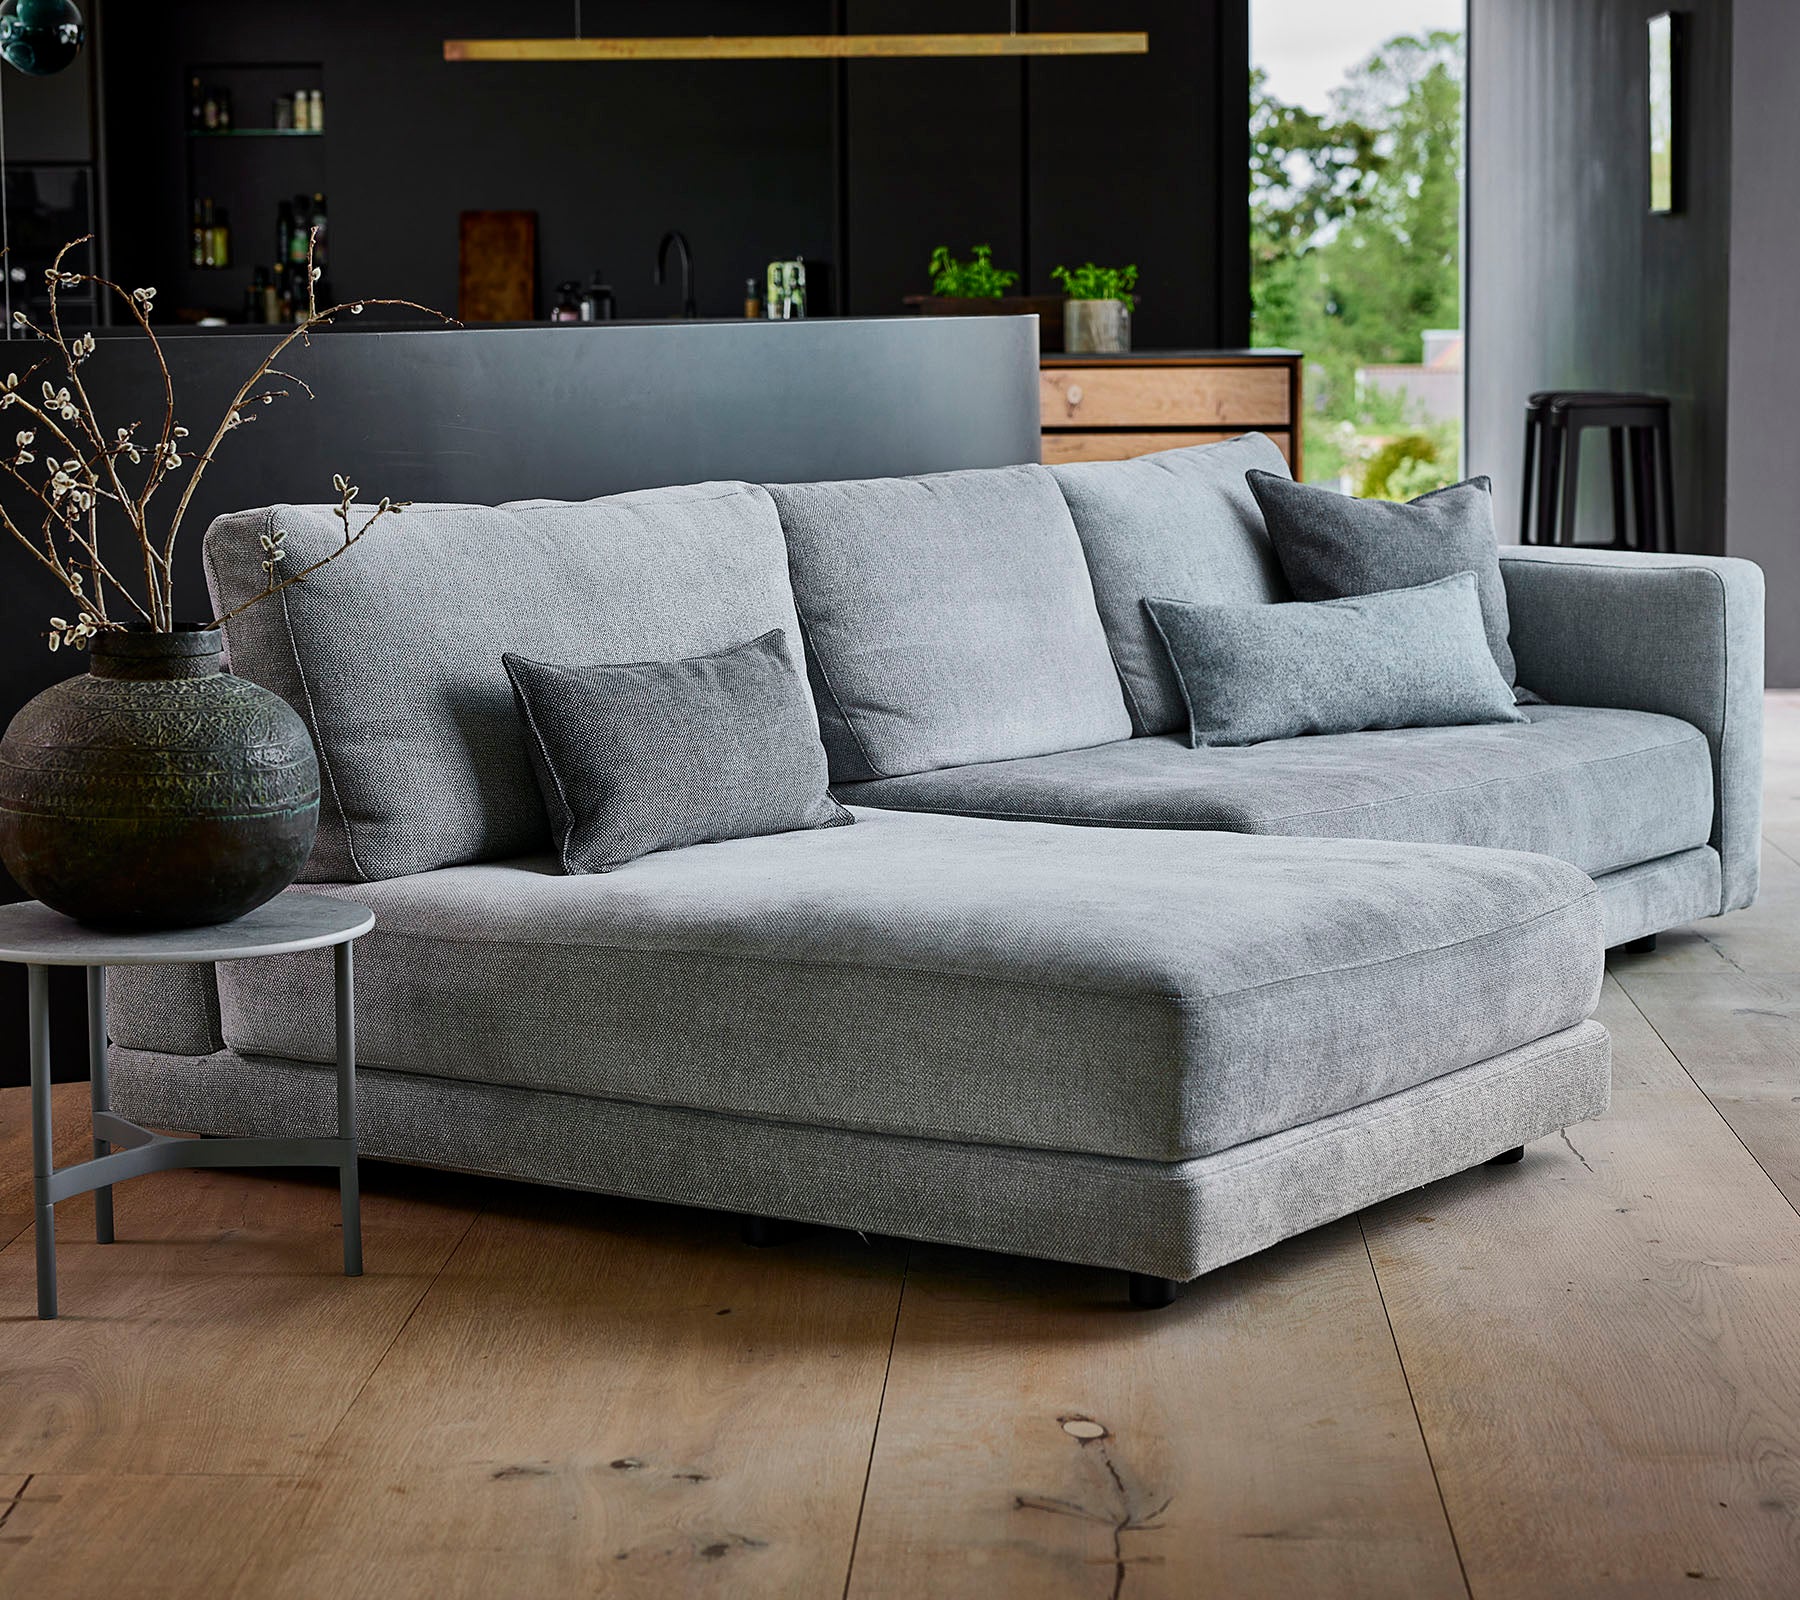 Scale sofá para dos personas con camastro doble, descansabrazo & mesa, derecho (3.2)